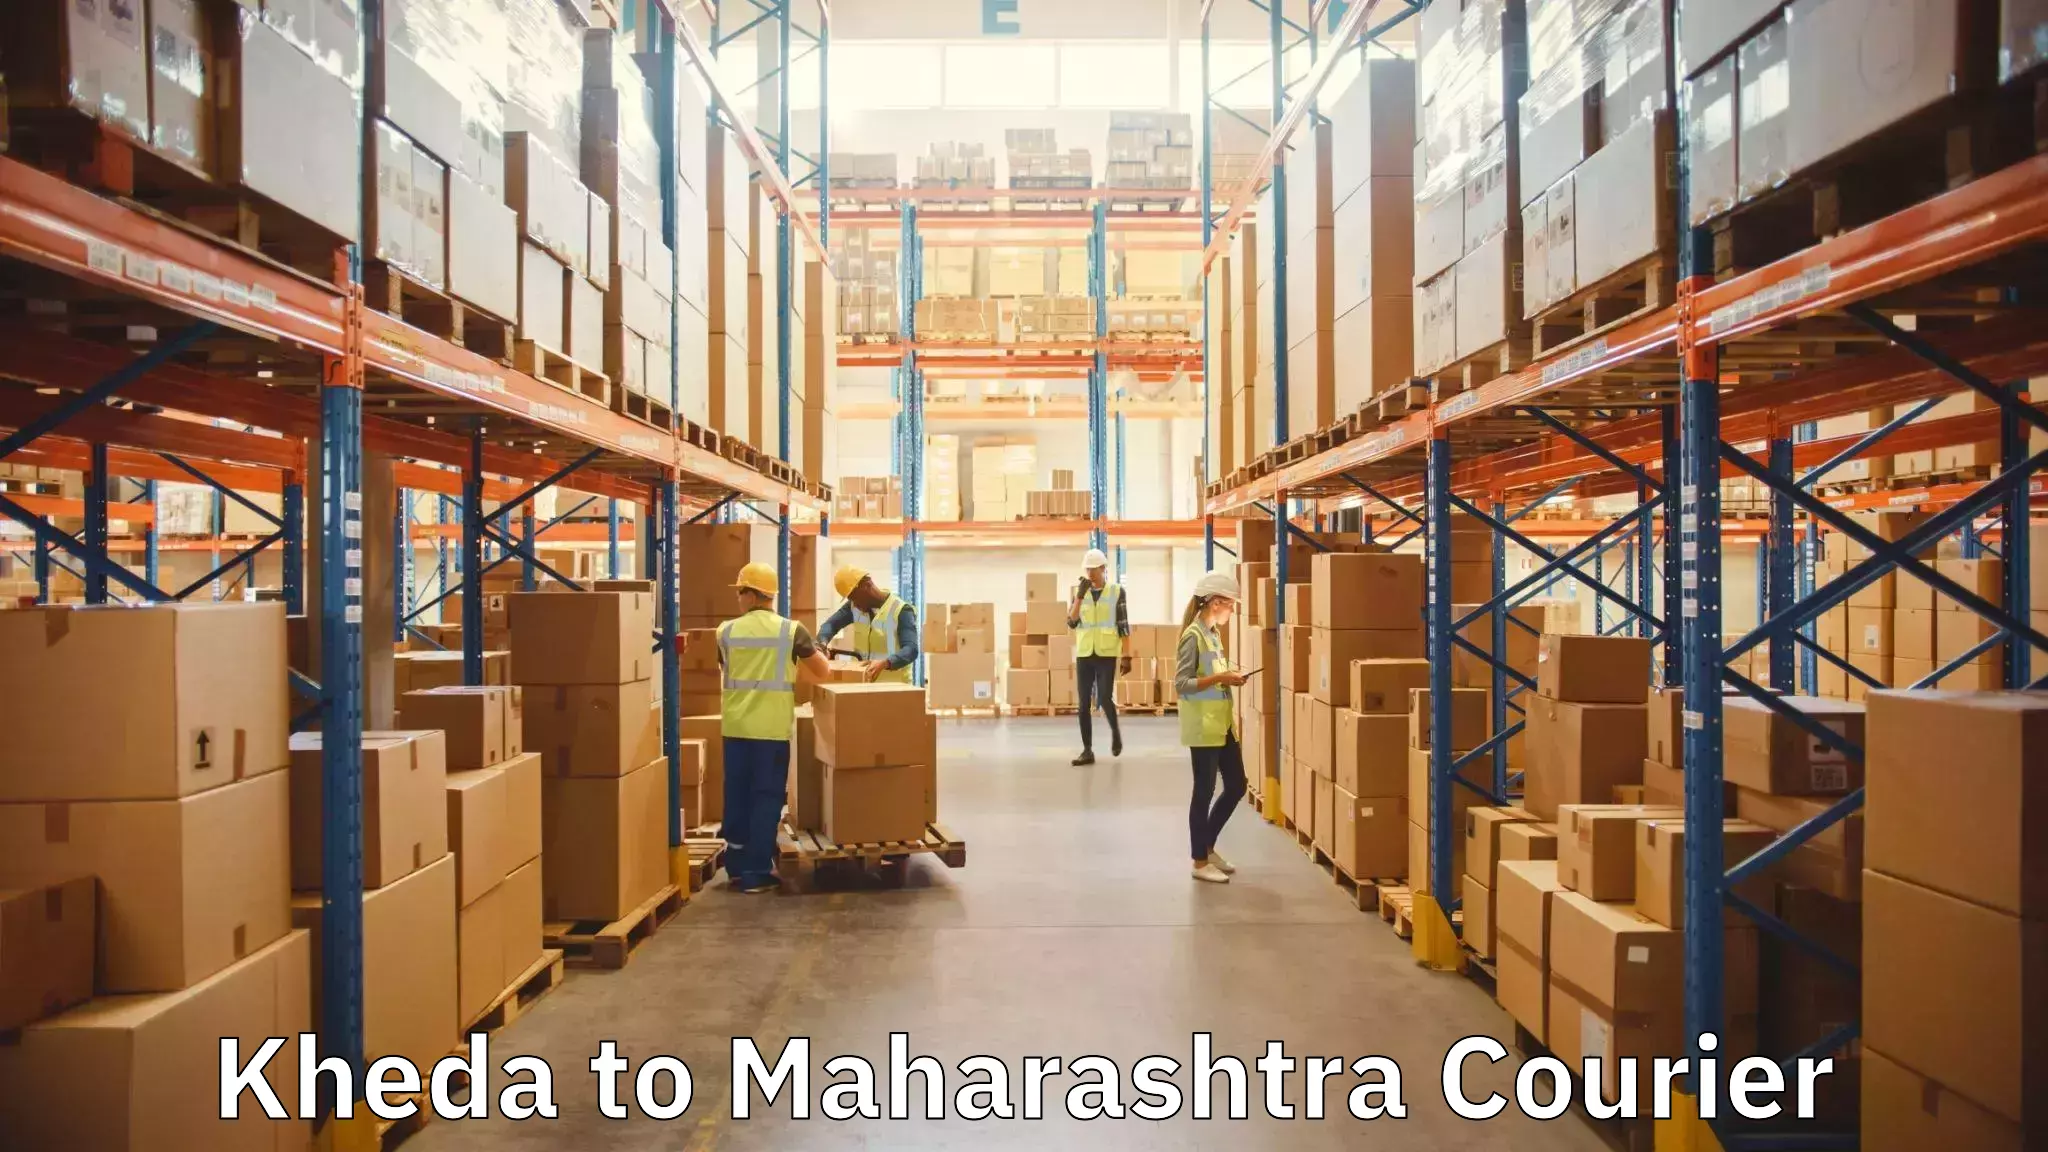 Professional moving company Kheda to Maharashtra